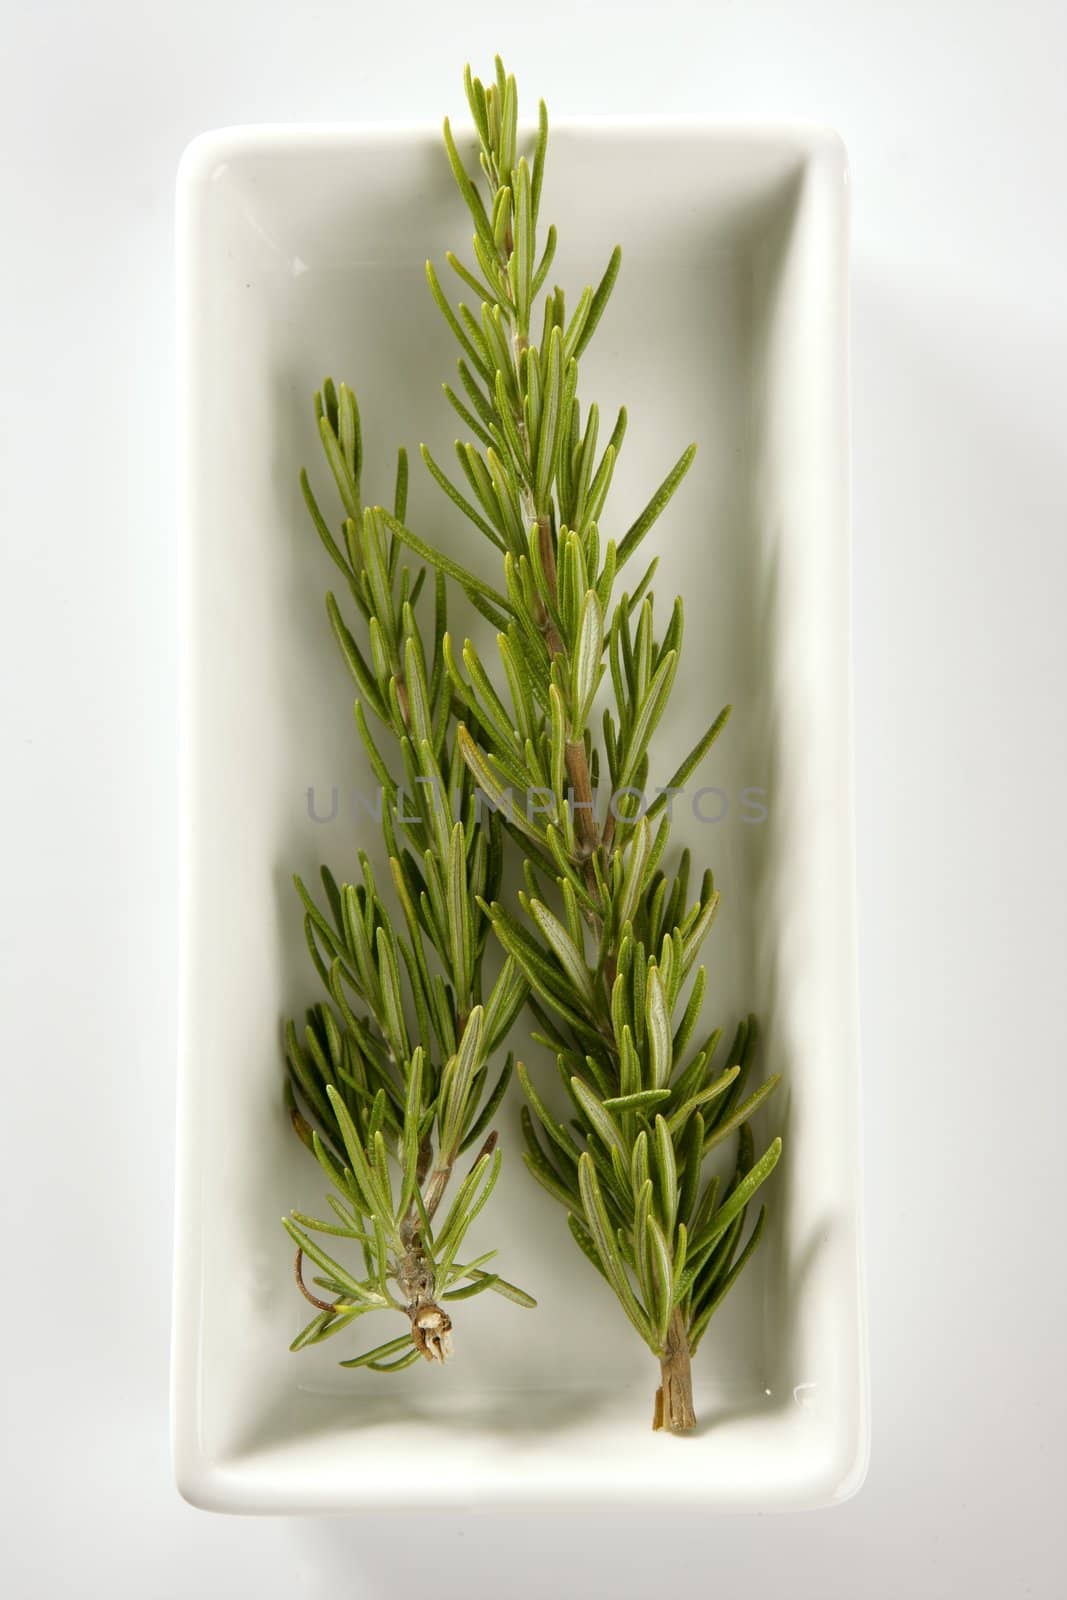 Rosemery aromatic plant in a white dish by lunamarina